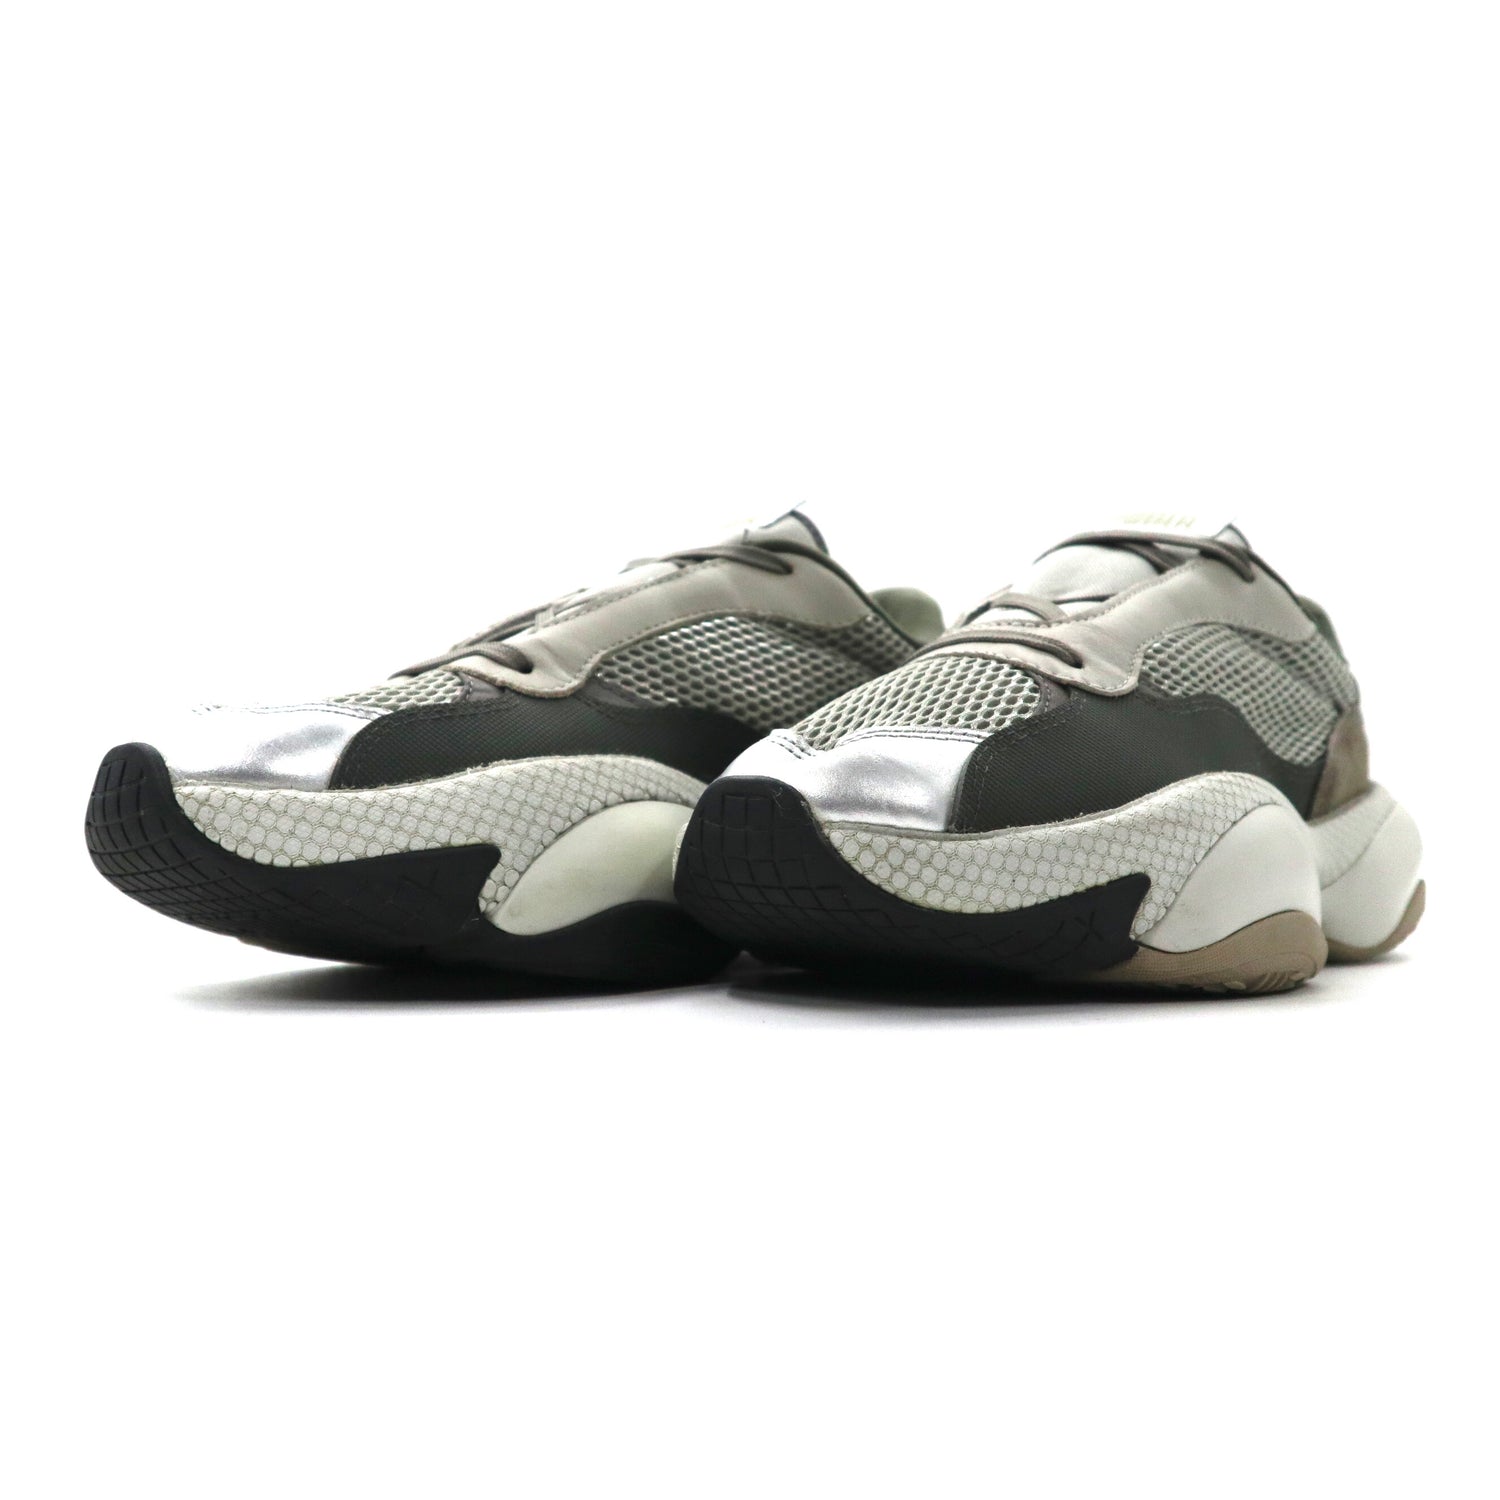 PUMA × HAN KJOBENHAVN Sneakers US9 Gray Alteration PN-2 370771-01 2019 model